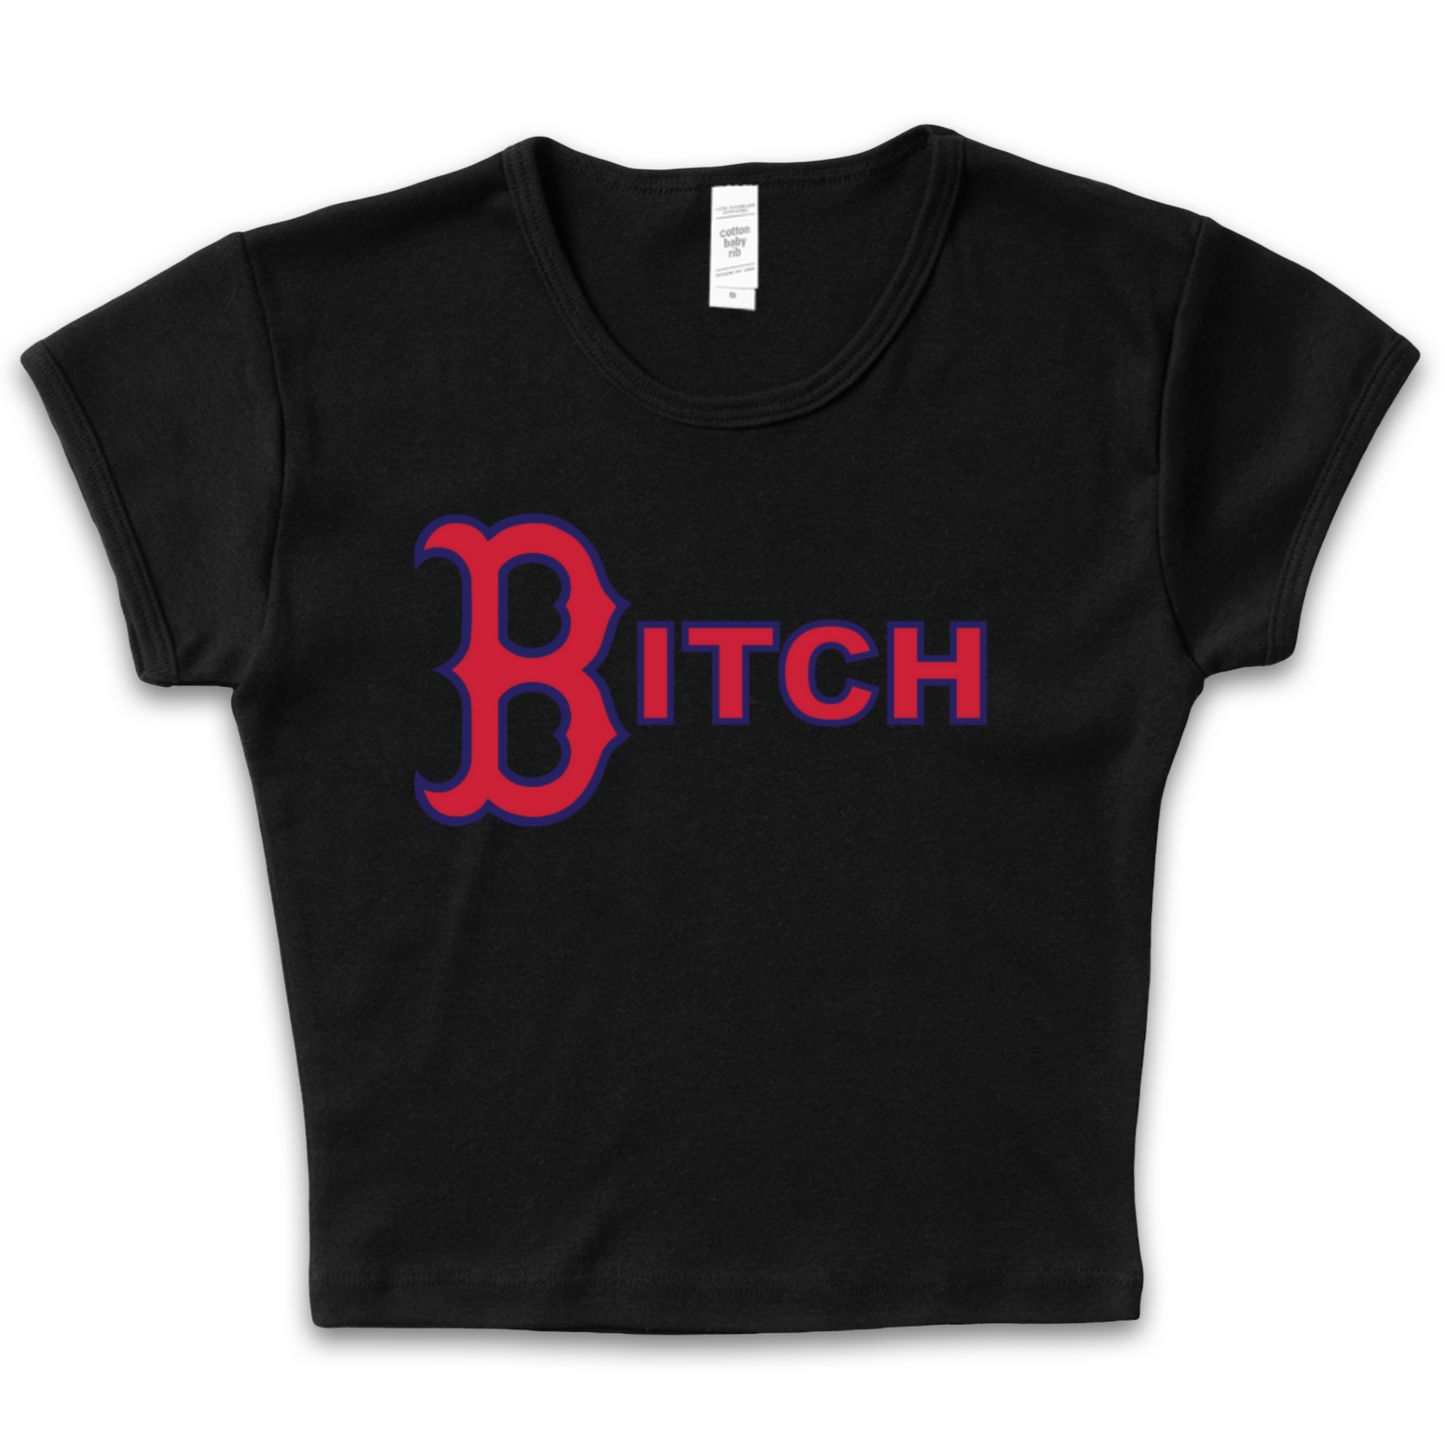 Boston Bitch Baby Tee